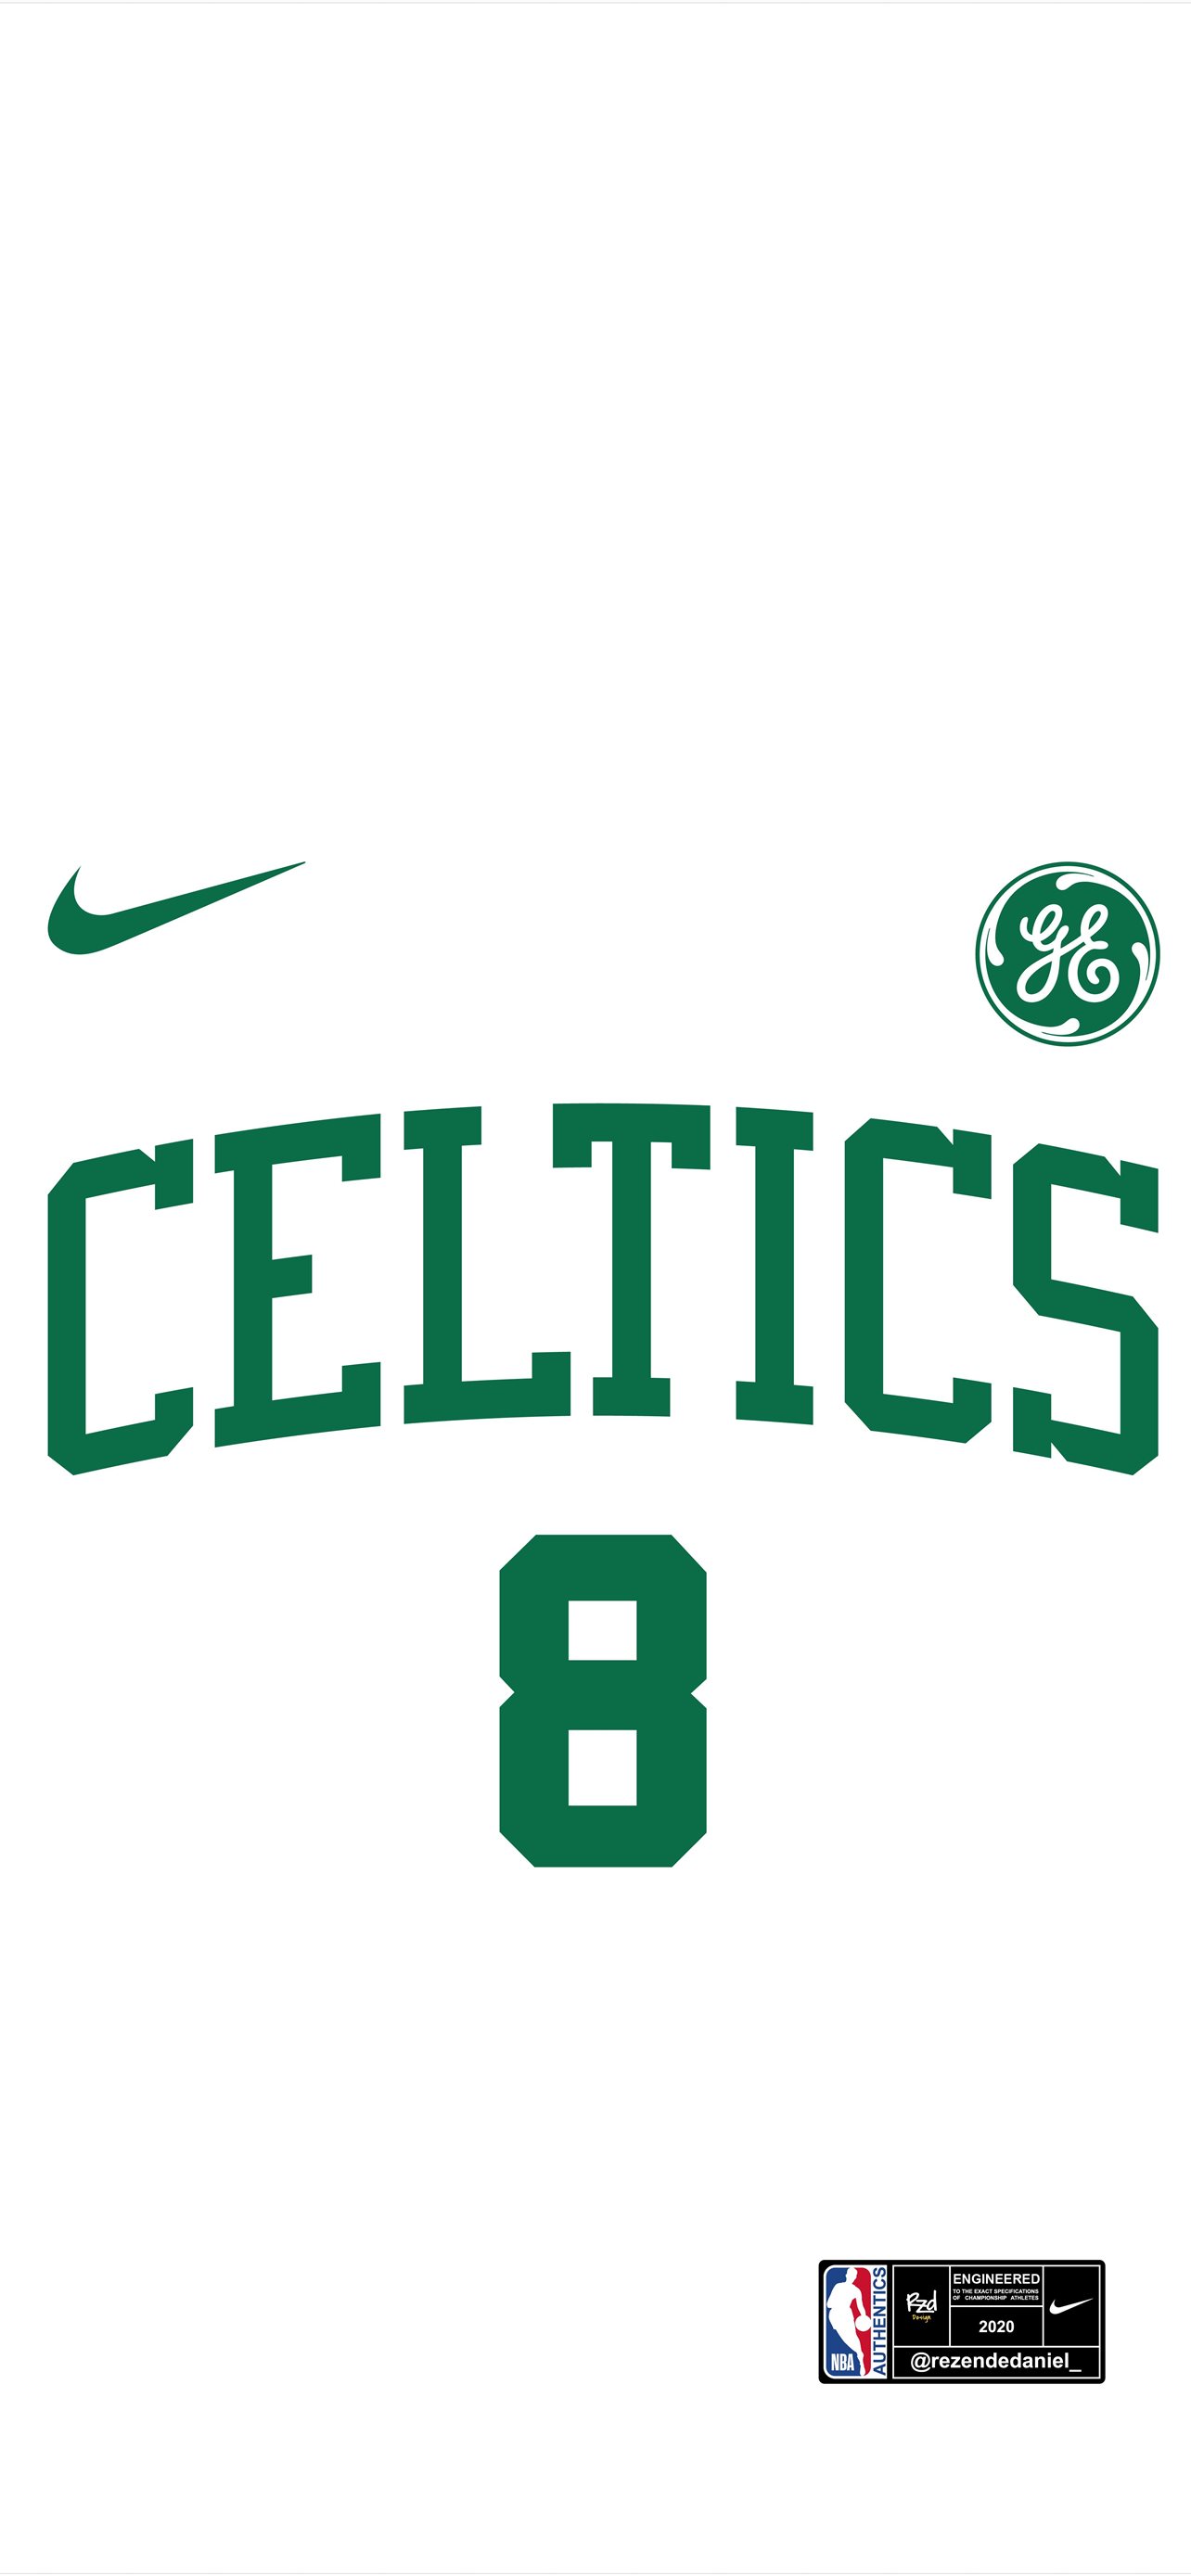 Boston Celtics Wallpapers 86 images